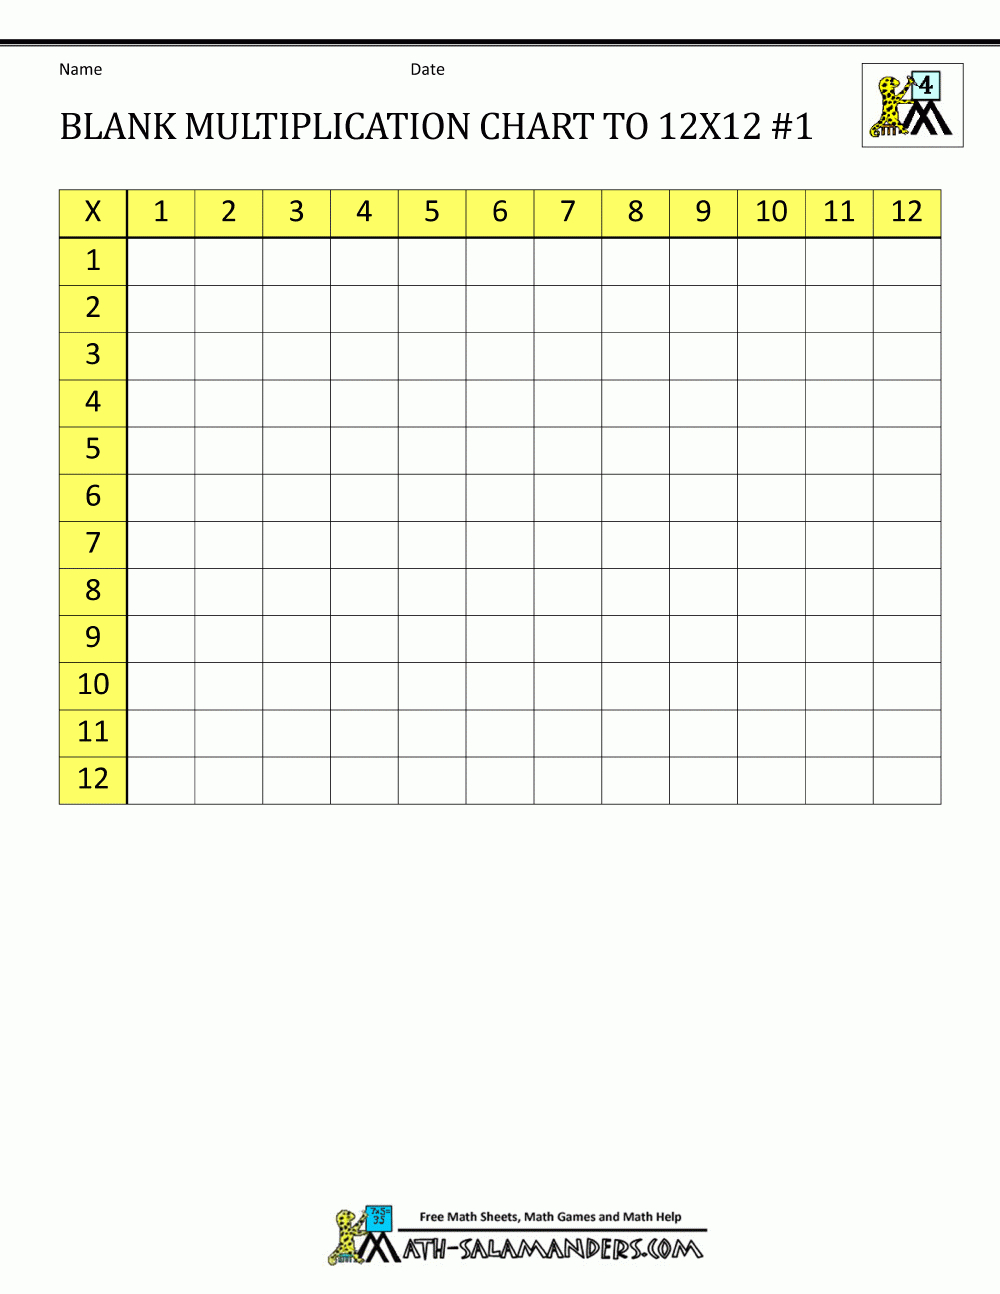 Blank Multiplication Charts Up To 12X12 regarding Printable Blank Multiplication Chart 0-12